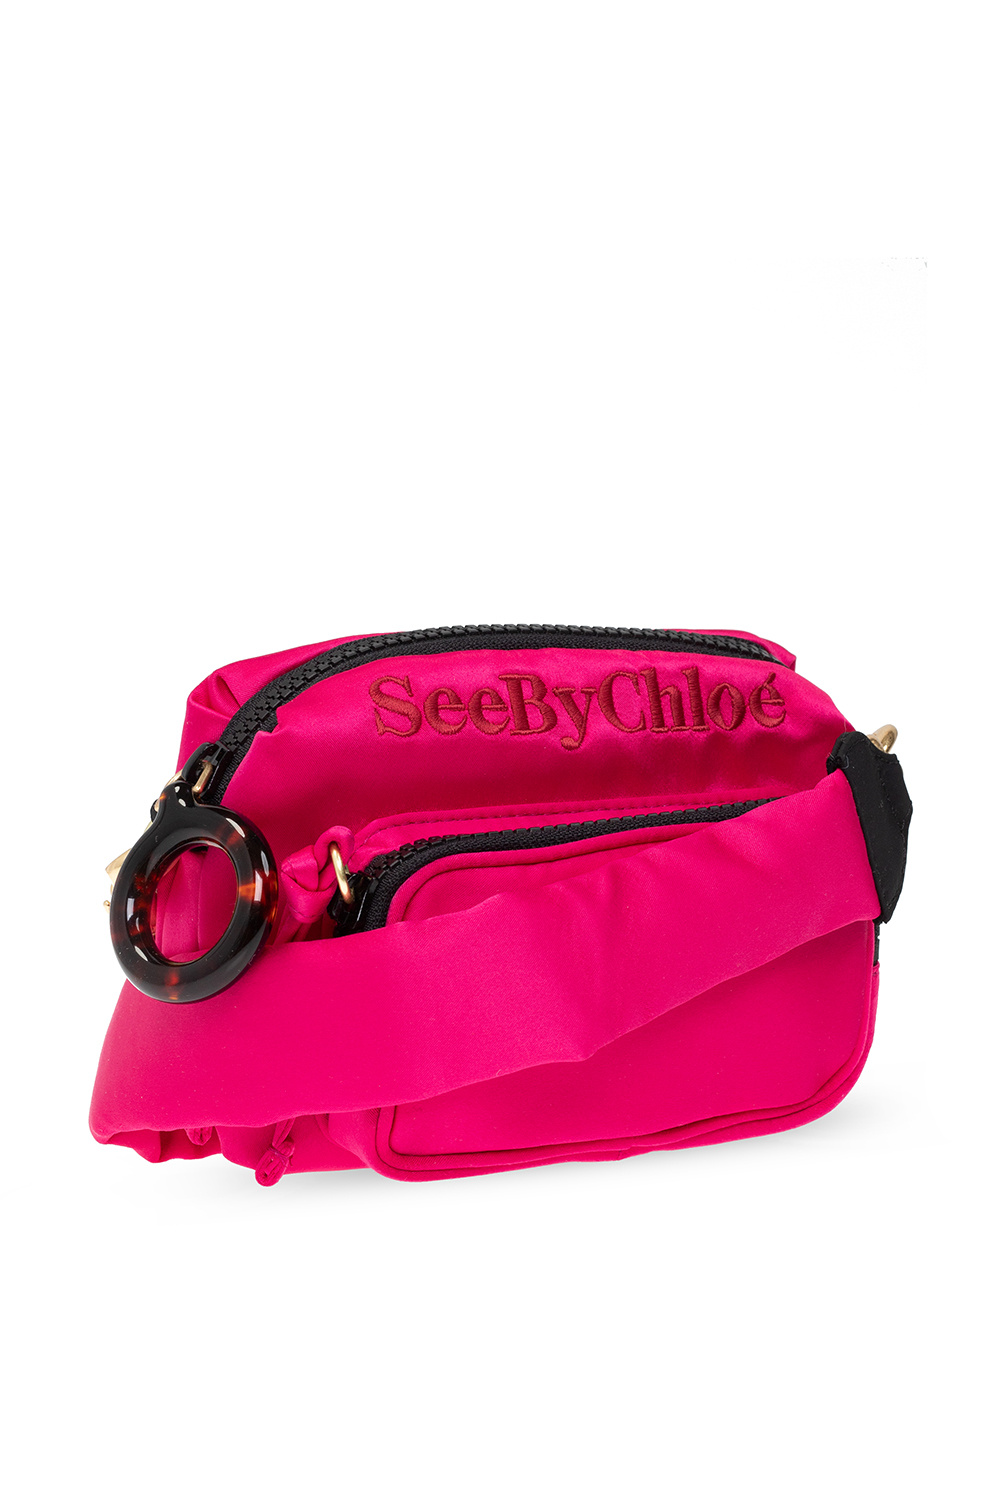 See By nero chloe ‘Tilly’ shoulder bag